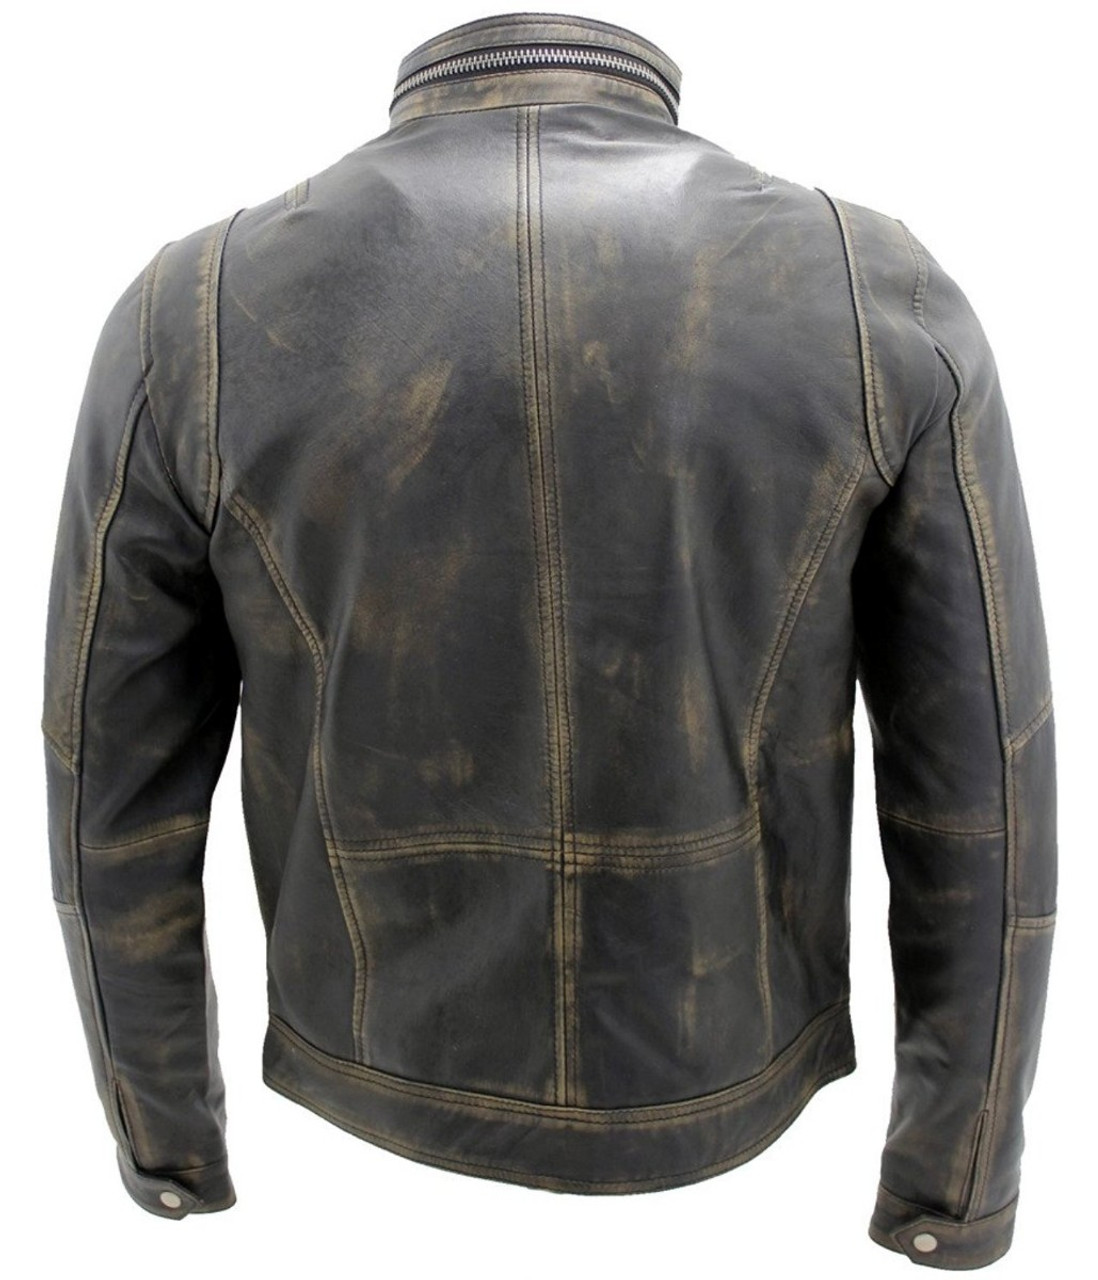 Hot Black Brando Biker Motorcycle Leather Jacket | Feather Skin